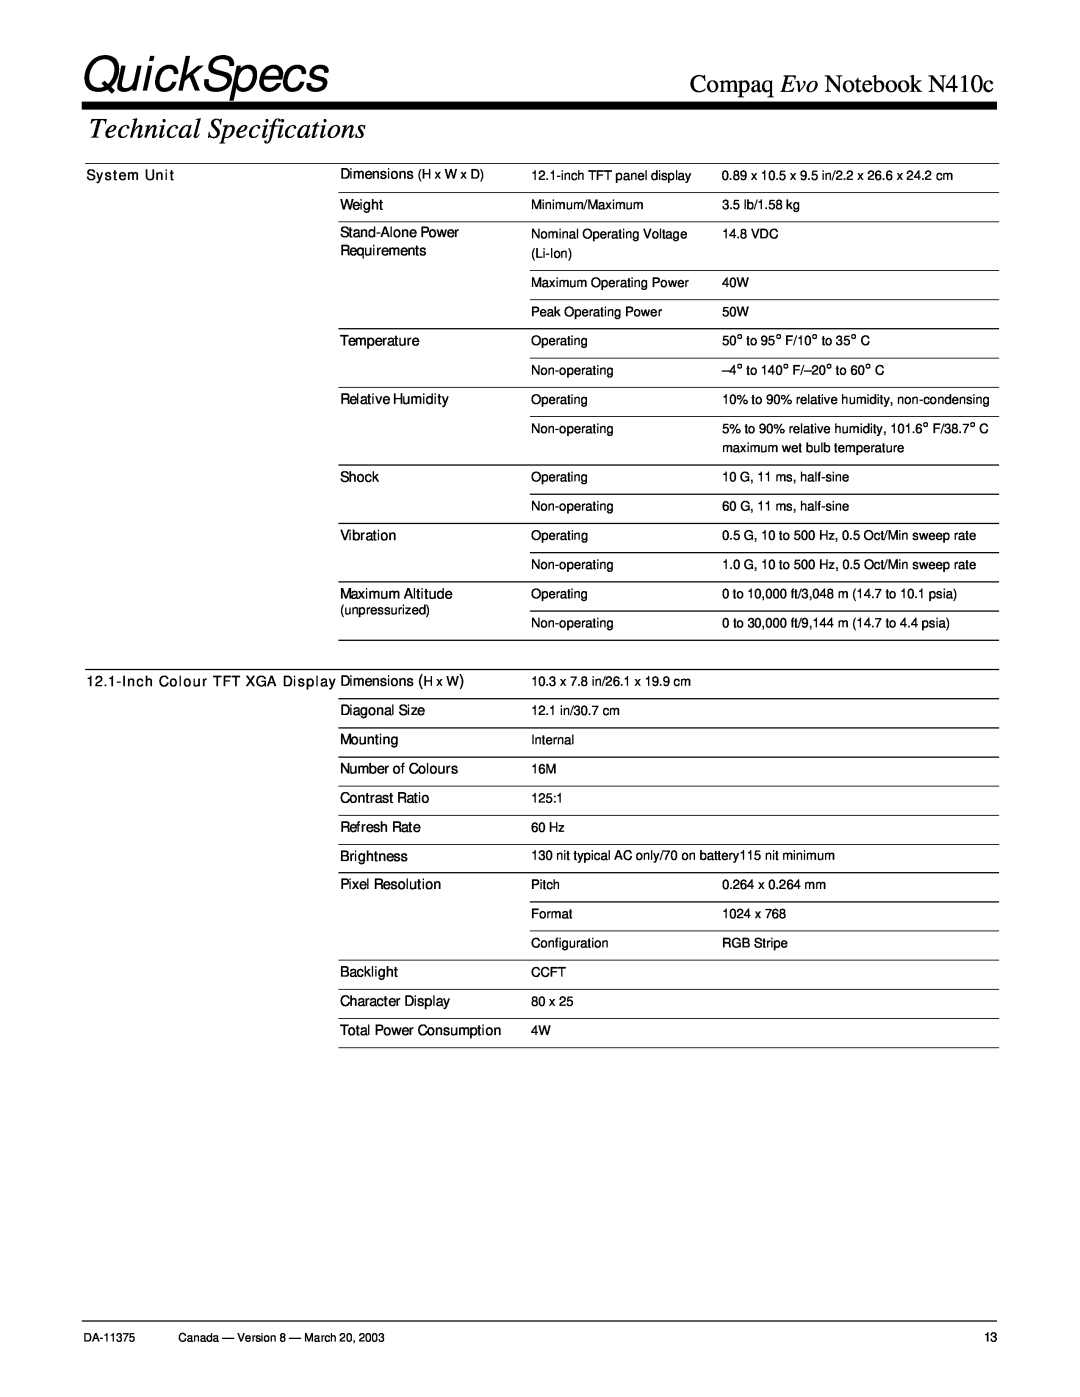 Compaq warranty Technical Specifications, QuickSpecs, Compaq Evo Notebook N410c 